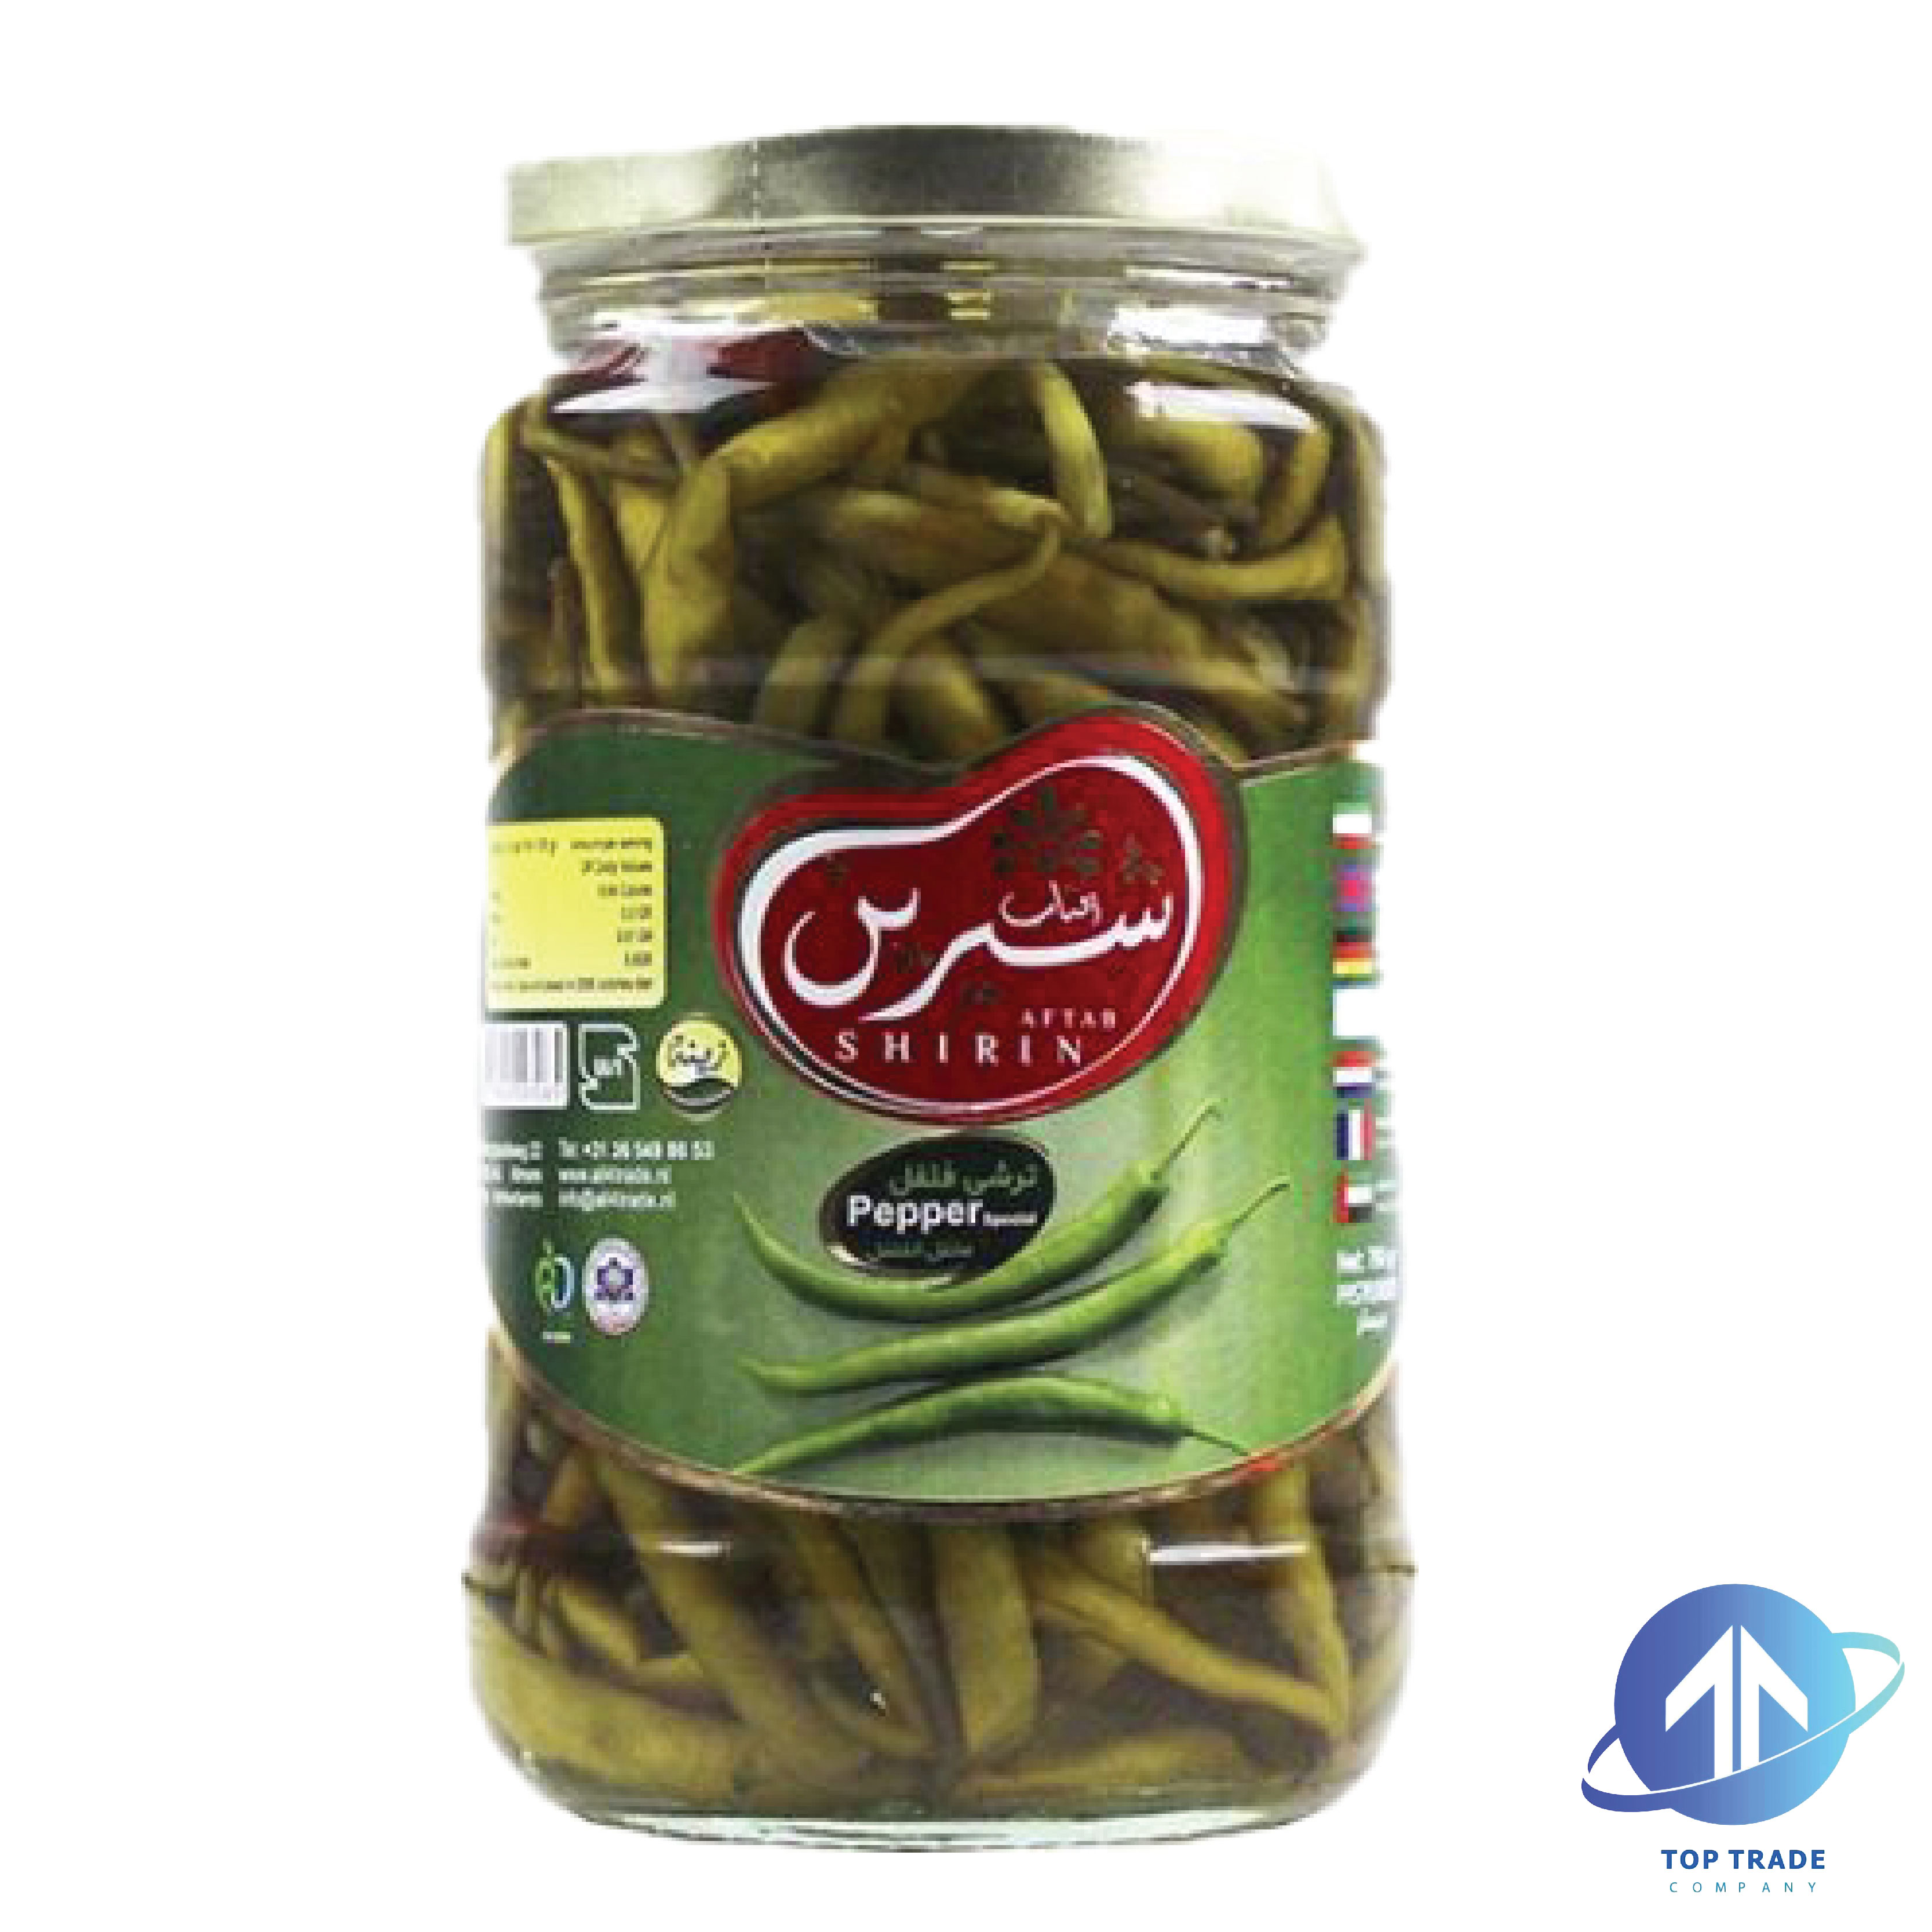 Aftab shirin Pepper pickles 700gr 